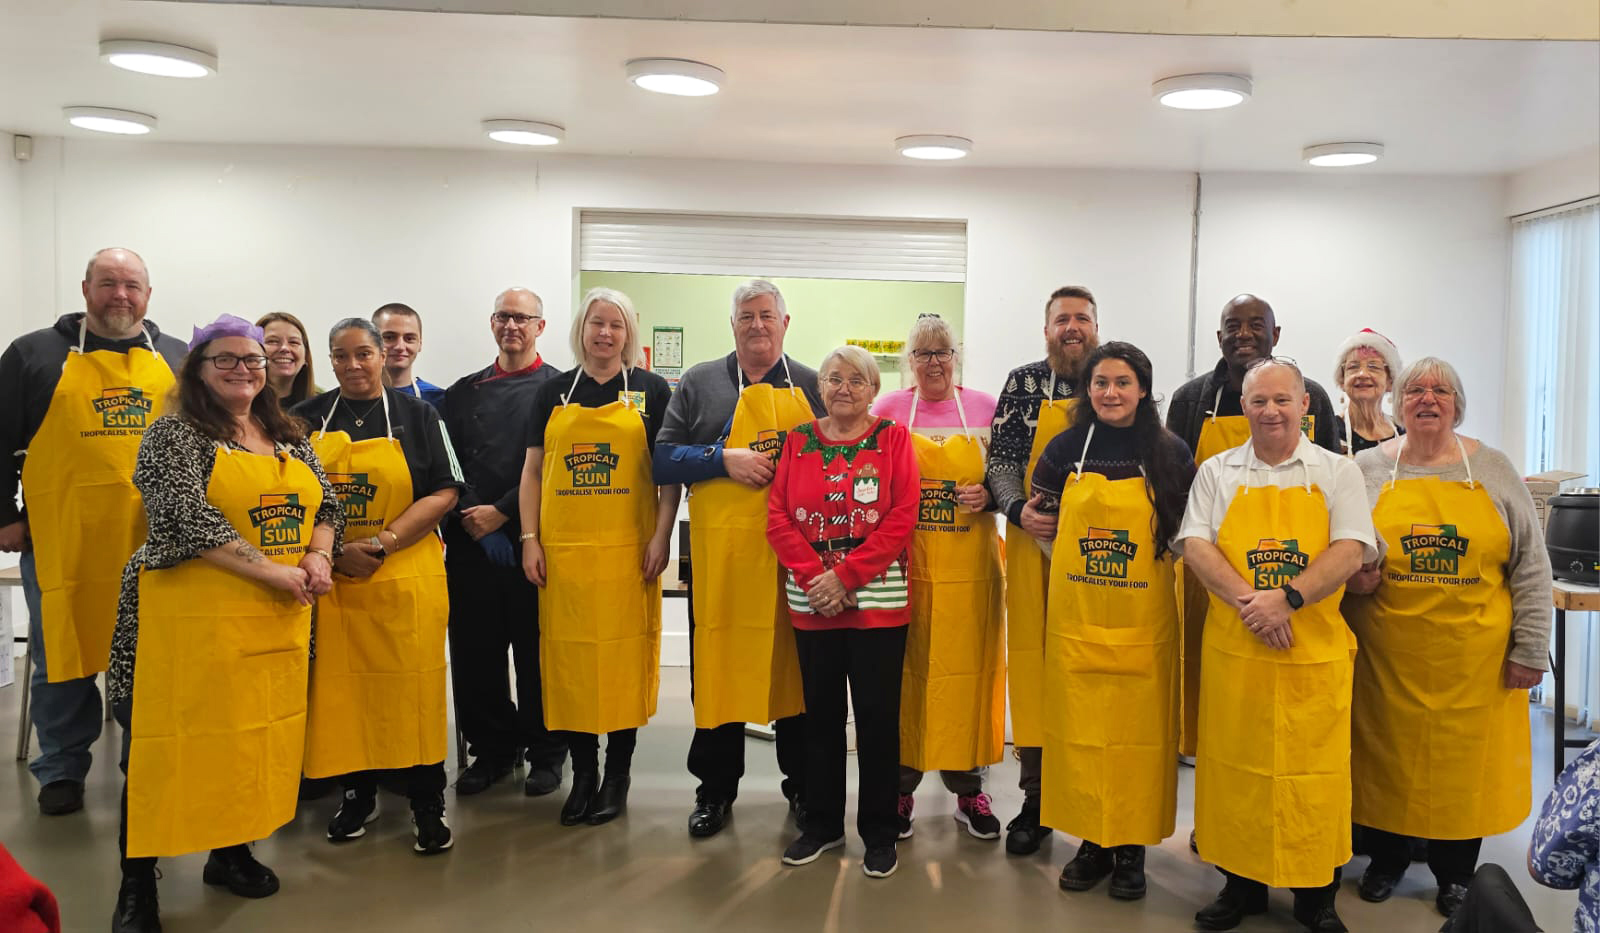 Rainham’s Mardyke Community Centre hosted an annual Christmas lunch for senior citizens.